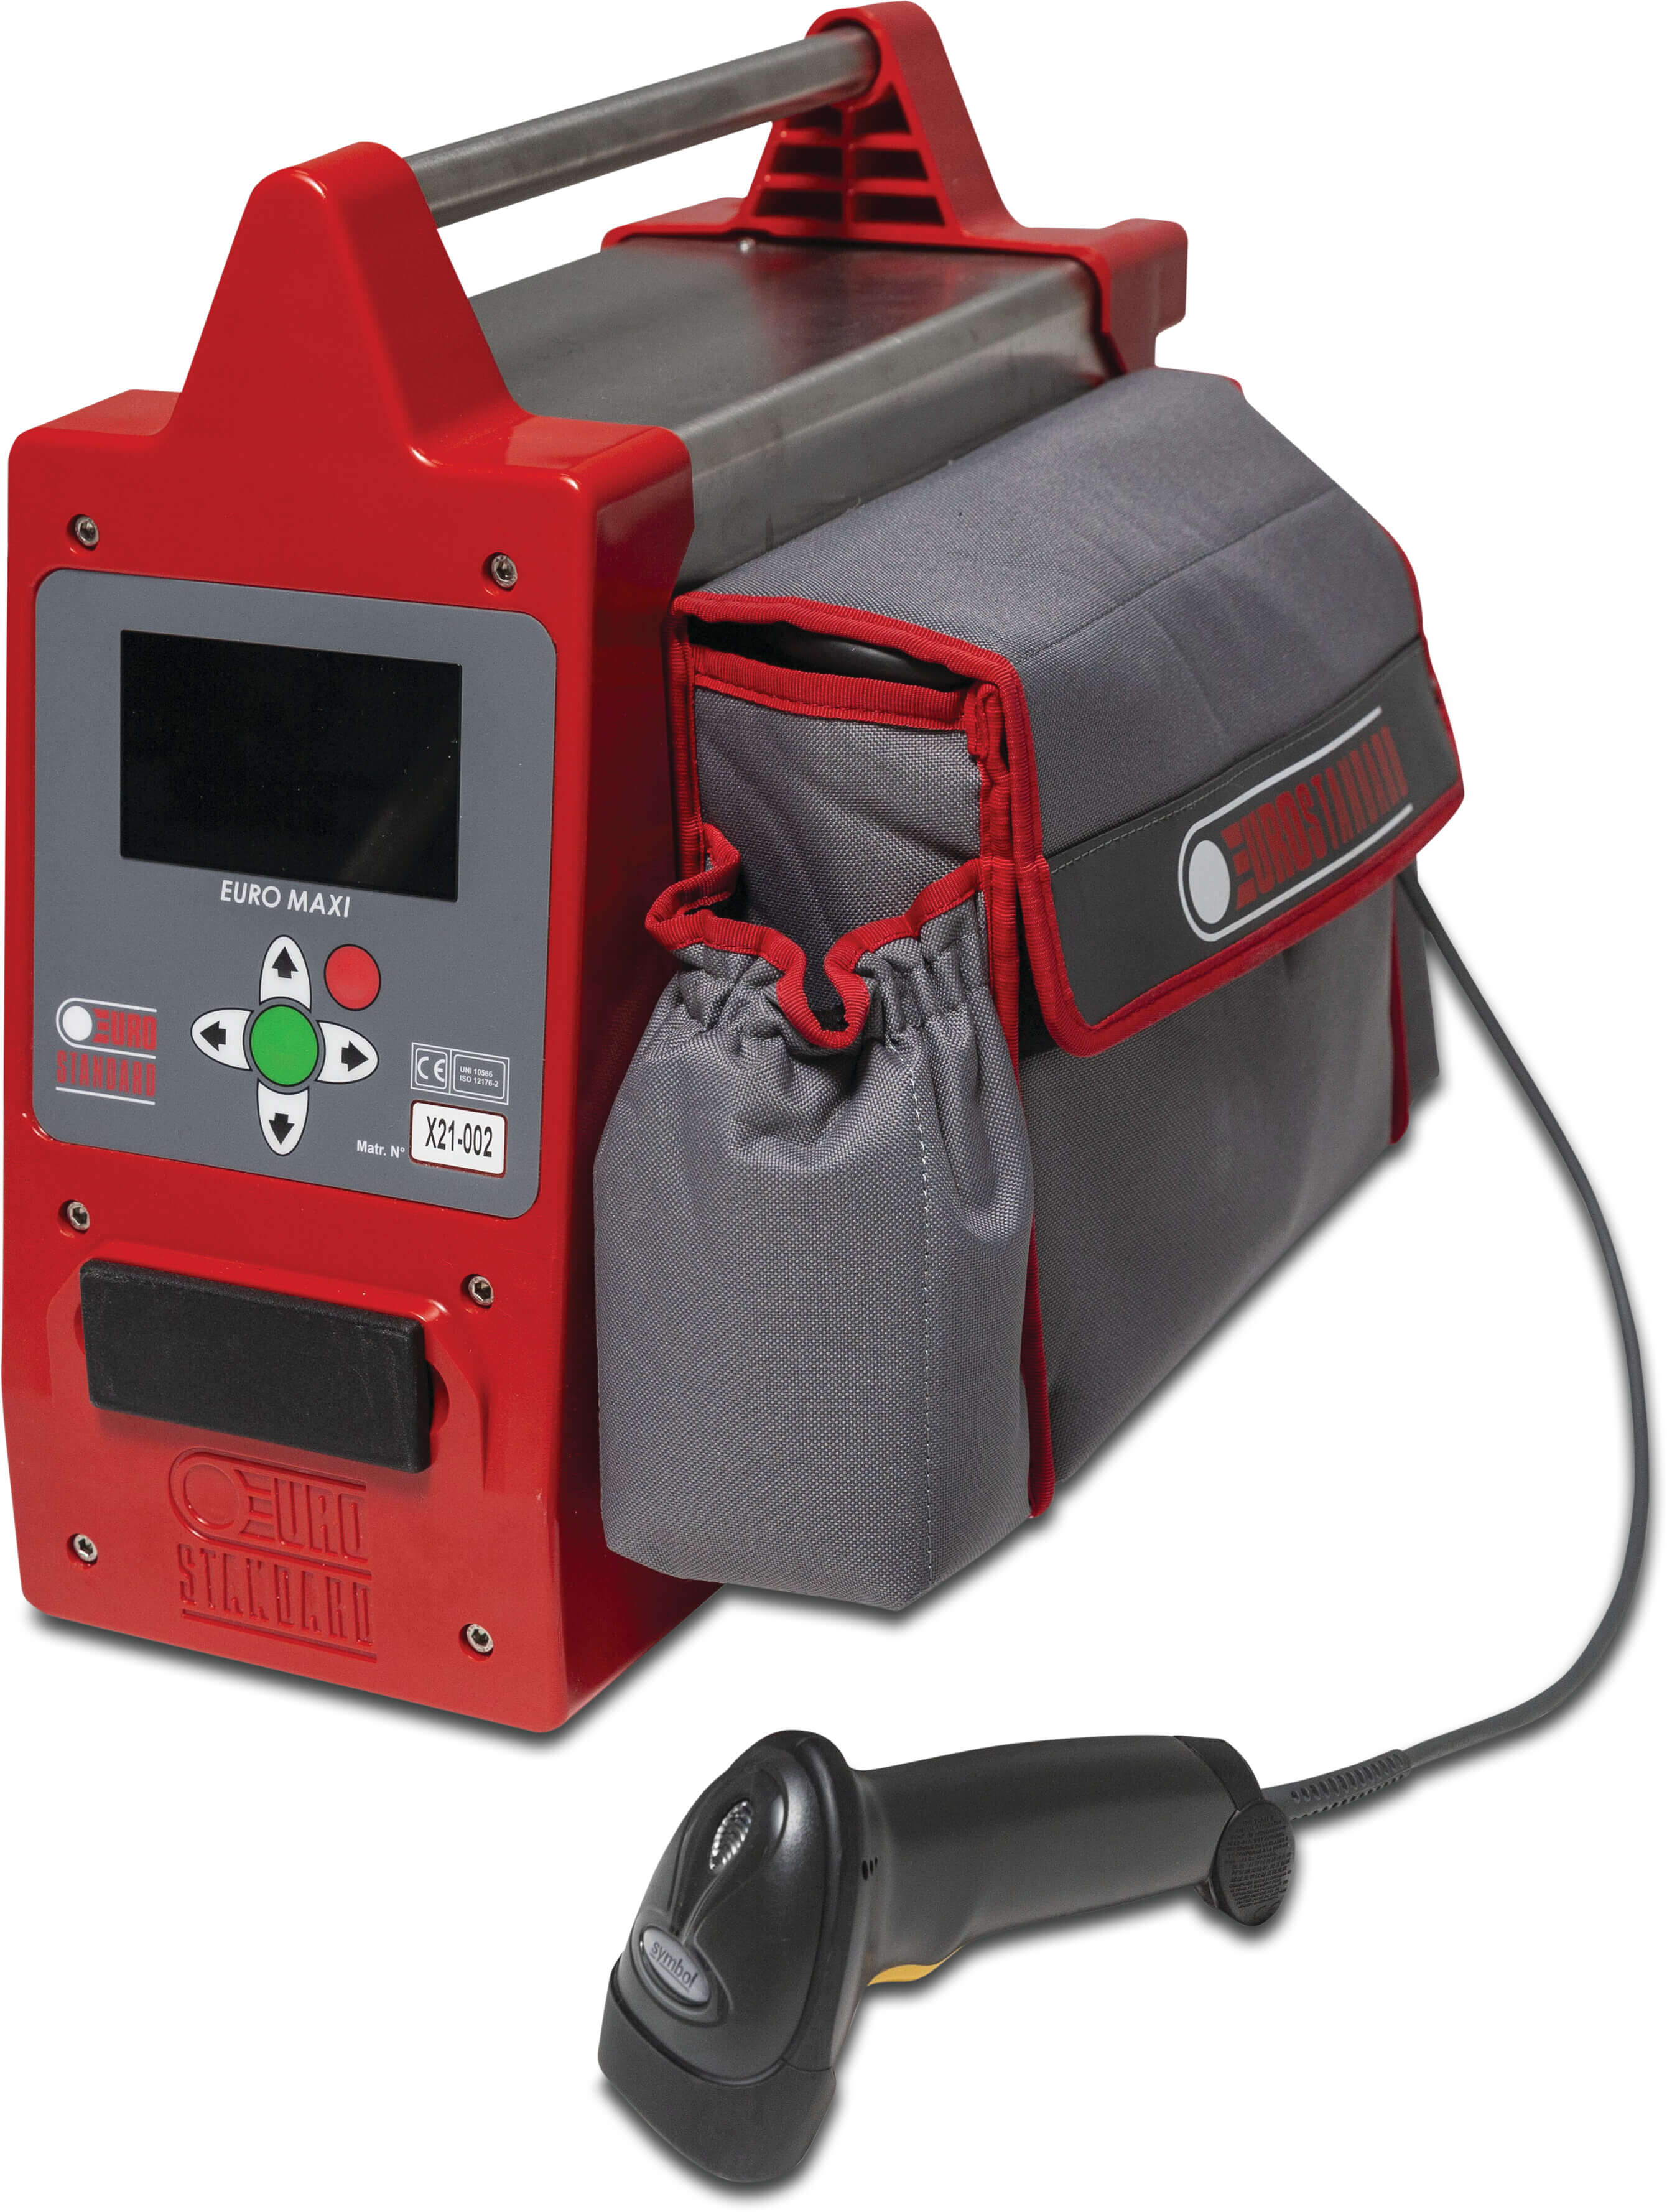 Electrofusion welding unit Euro Maxi incl barcode scanner 110A 230VAC